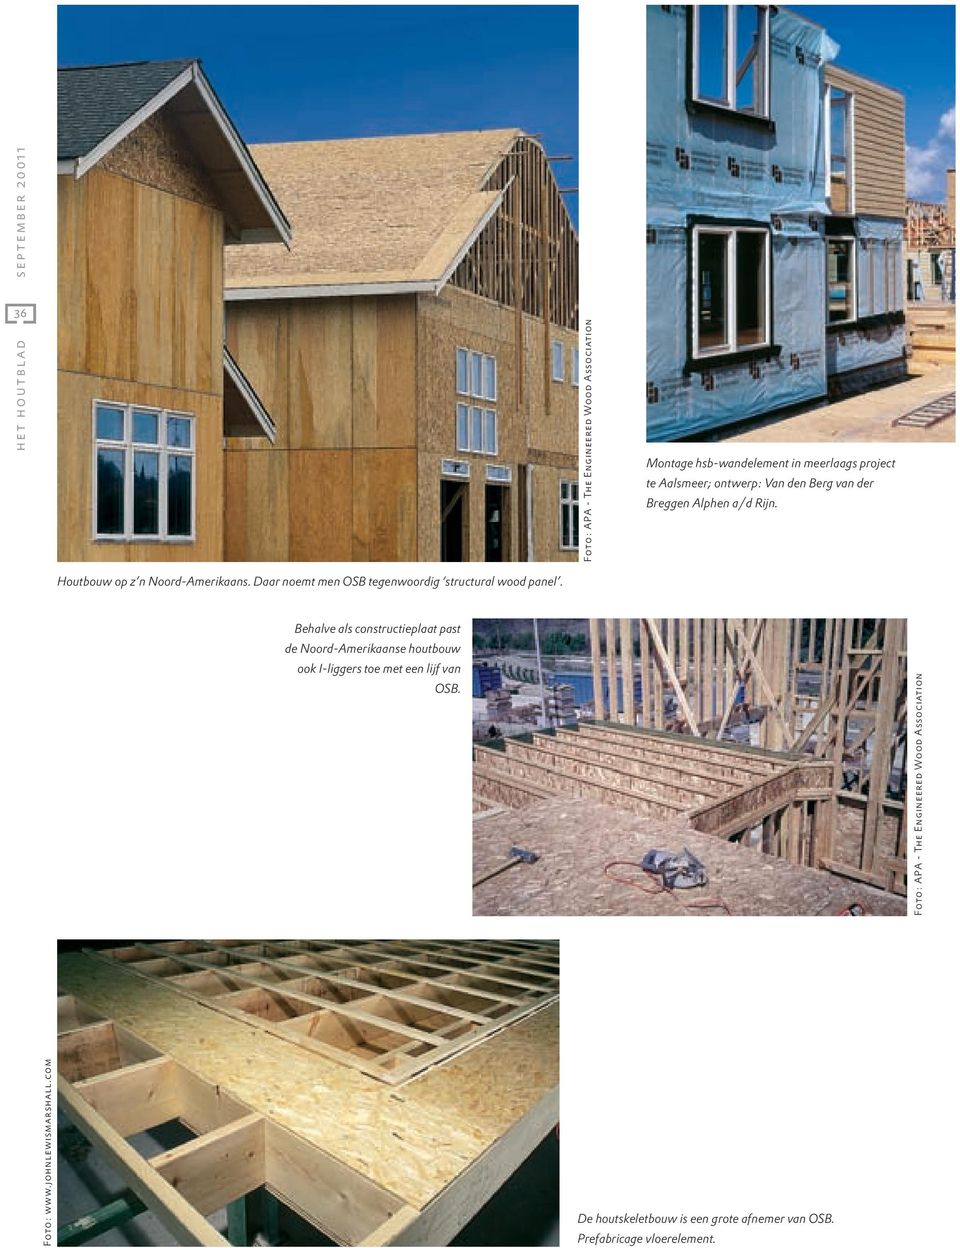 Daar noemt men OSB tegenwoordig structural wood panel.